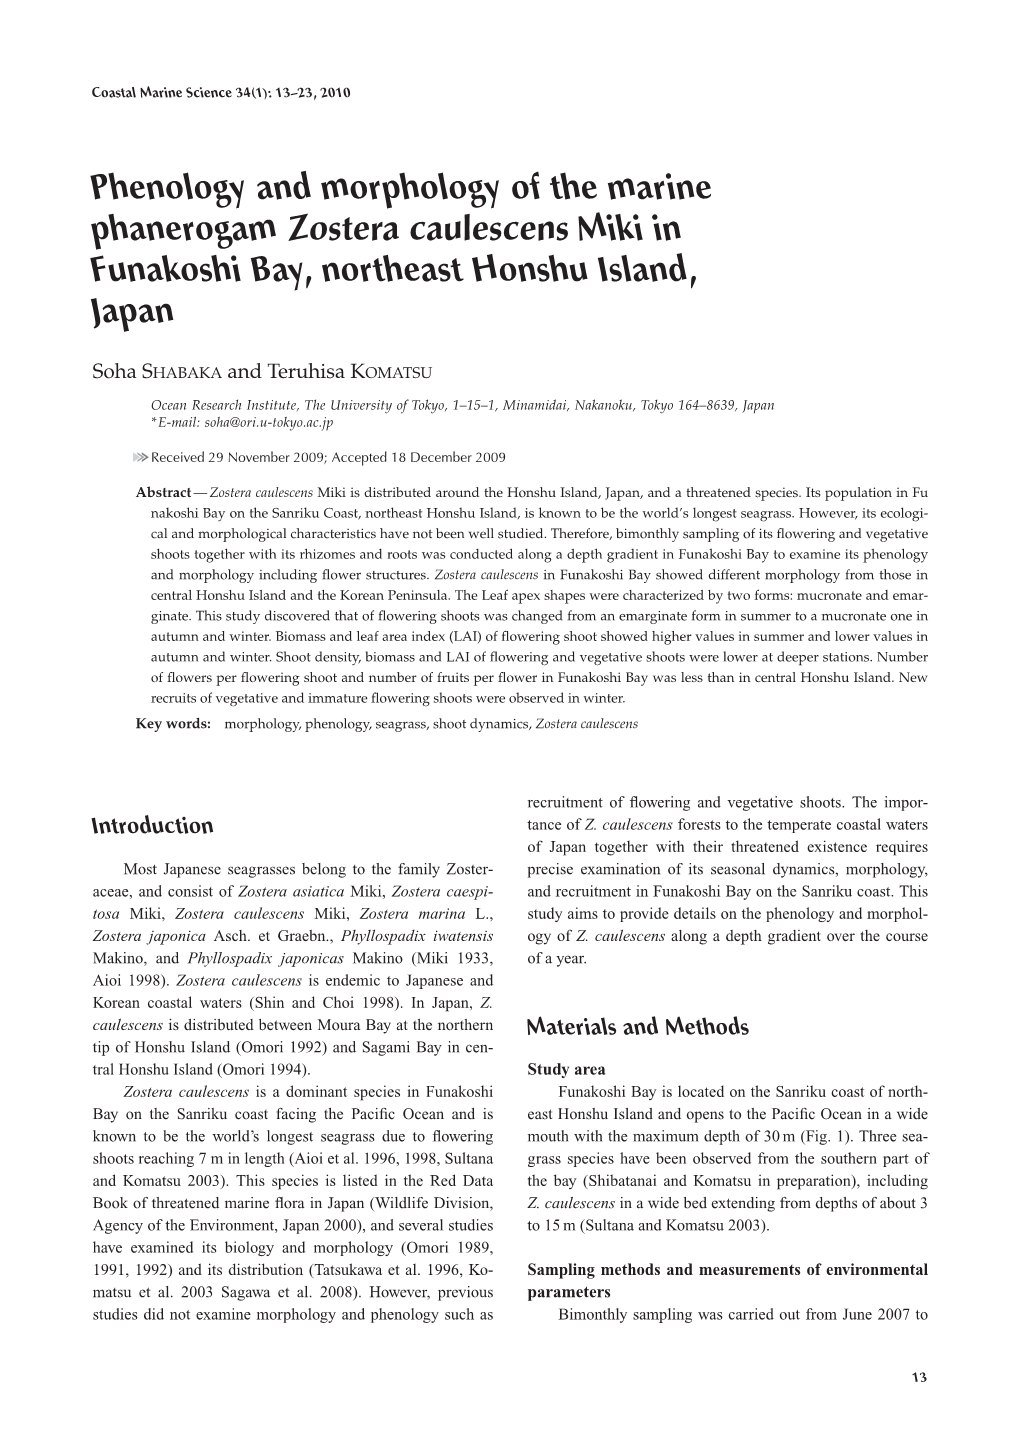 Phenology and Morphology of the Marine Phanerogam Zostera Caulescens Miki in Funakoshi Bay, Northeast Honshu Island, Japan